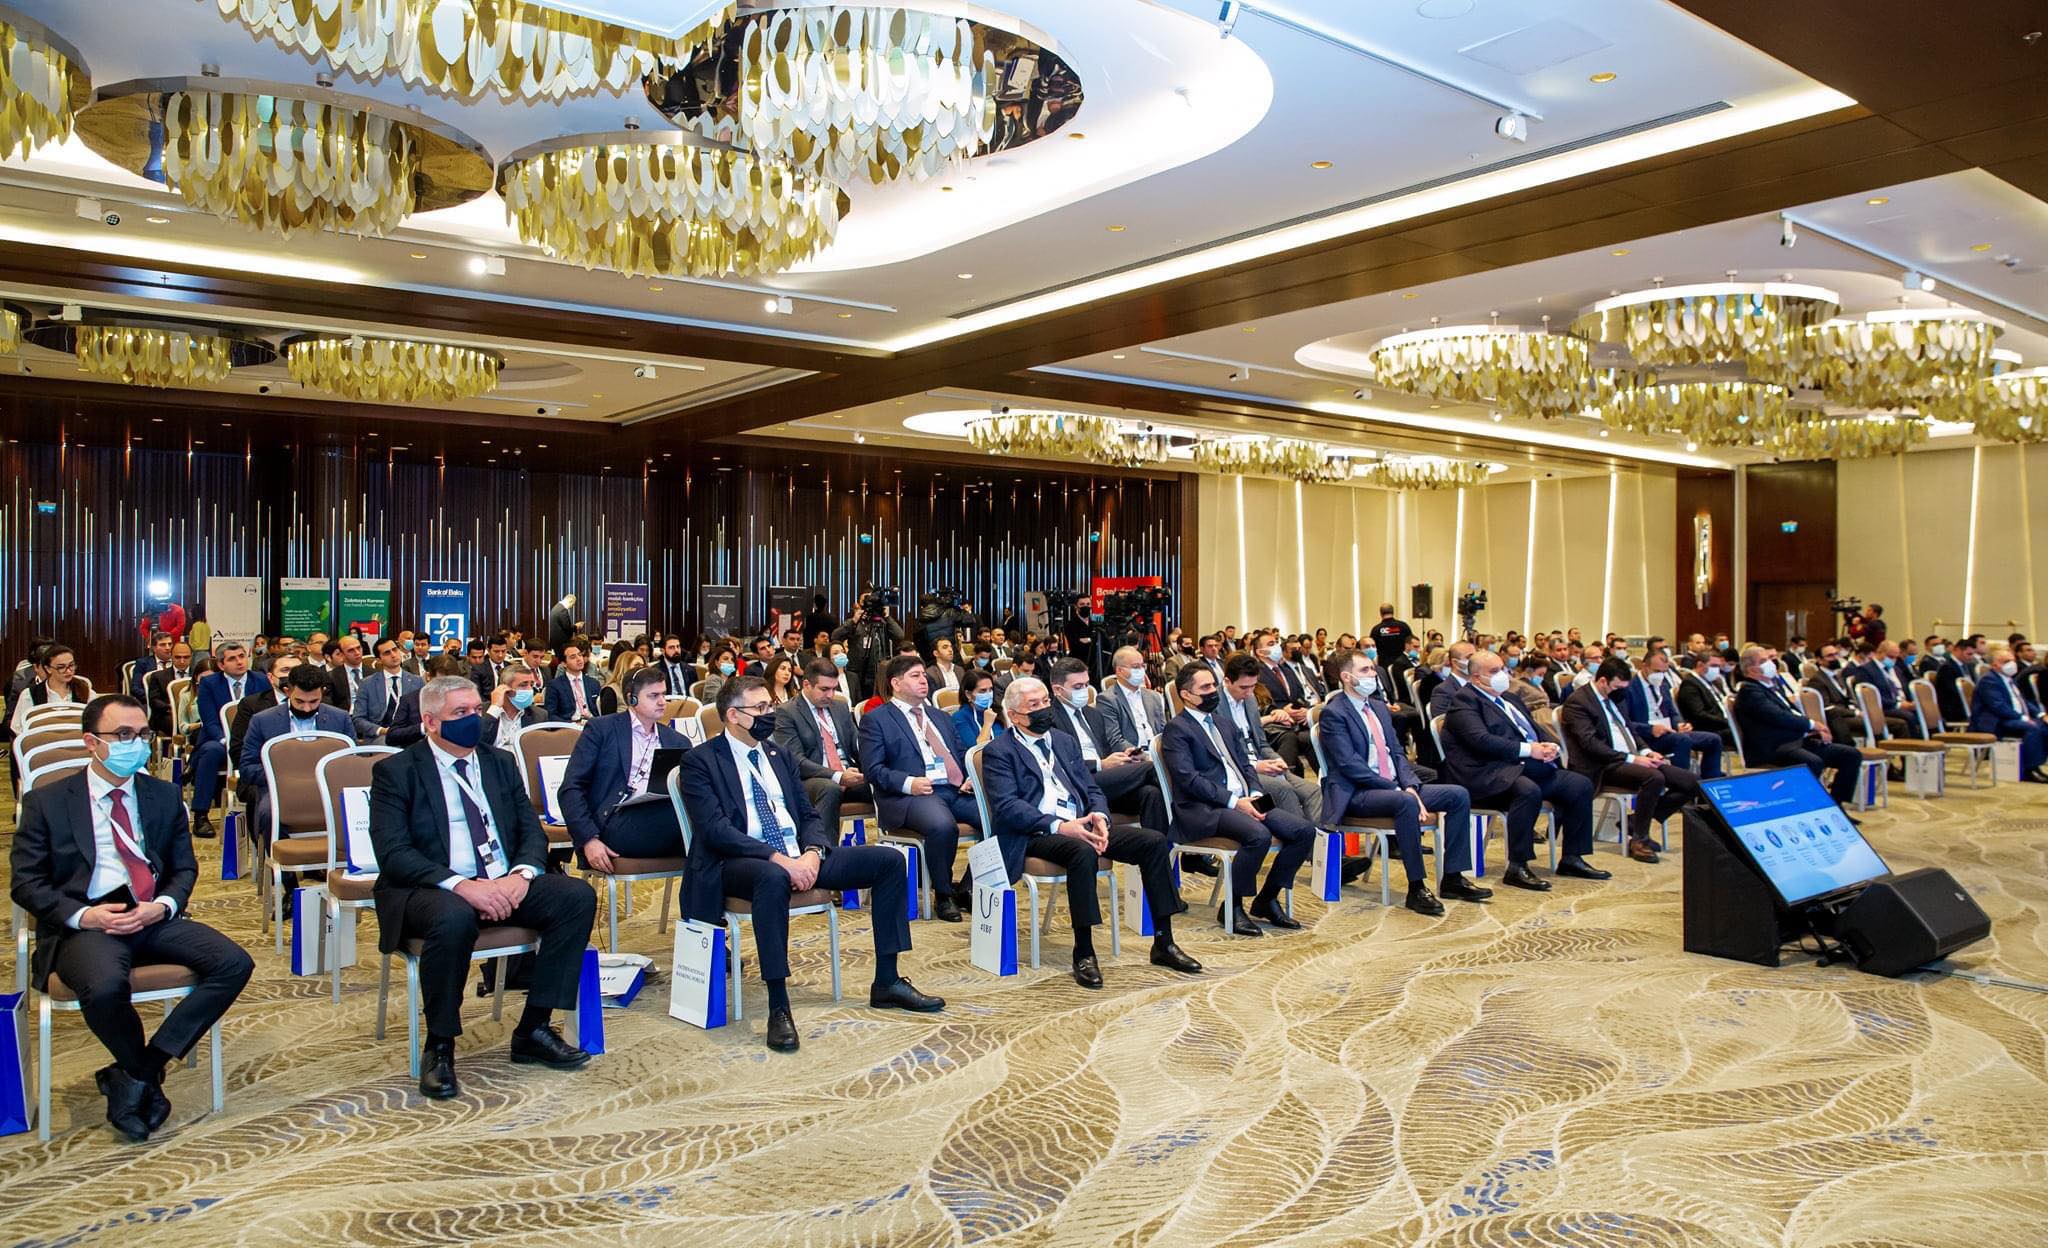 The 5th International Banking Forum has been held in Baku